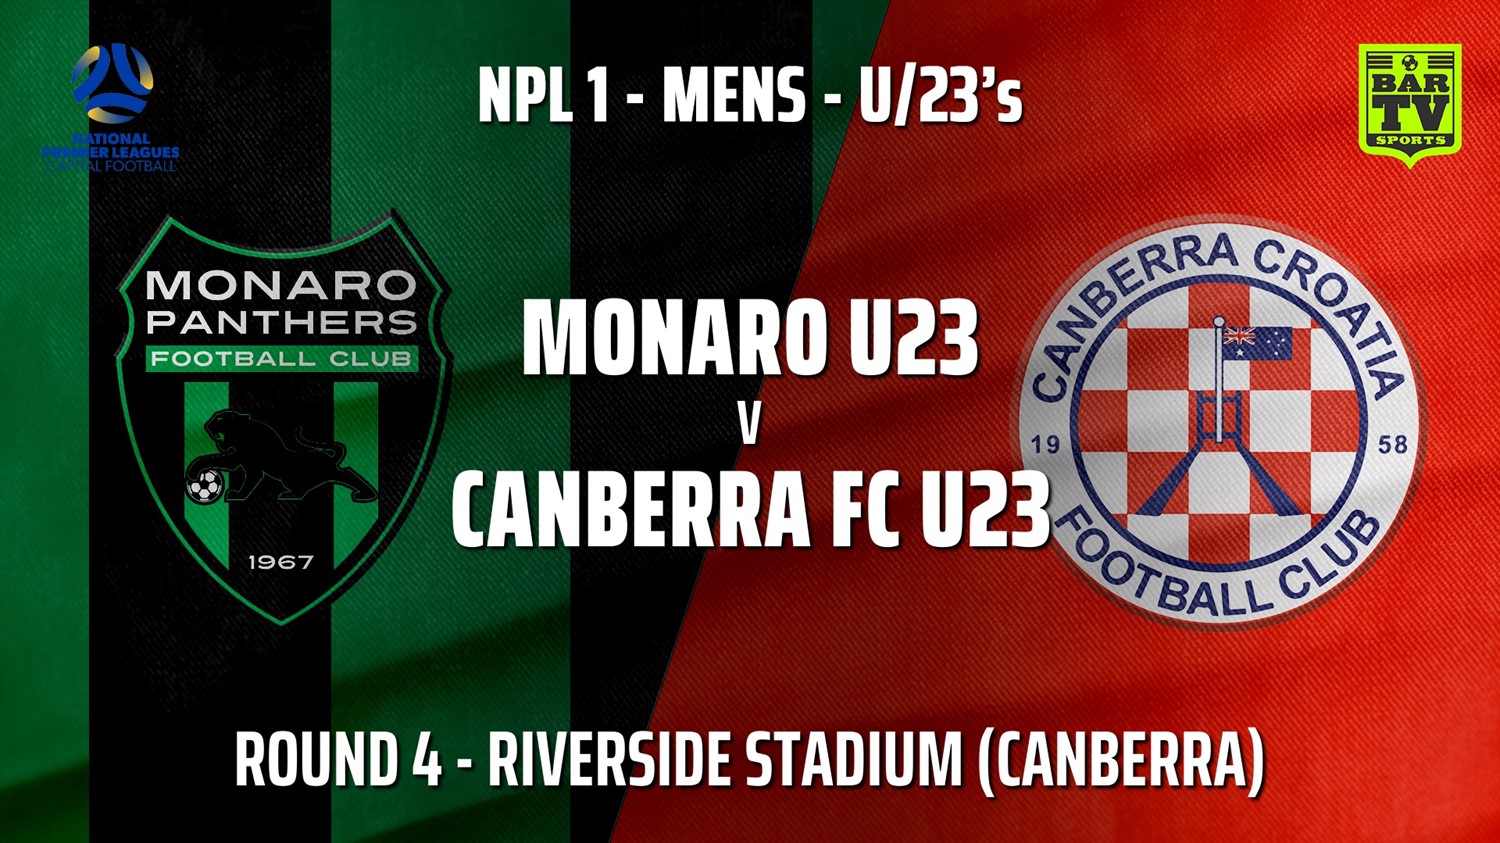 210501-NPL1 U23 Capital Round 4 - Monaro Panthers U23 v Canberra FC U23 Minigame Slate Image